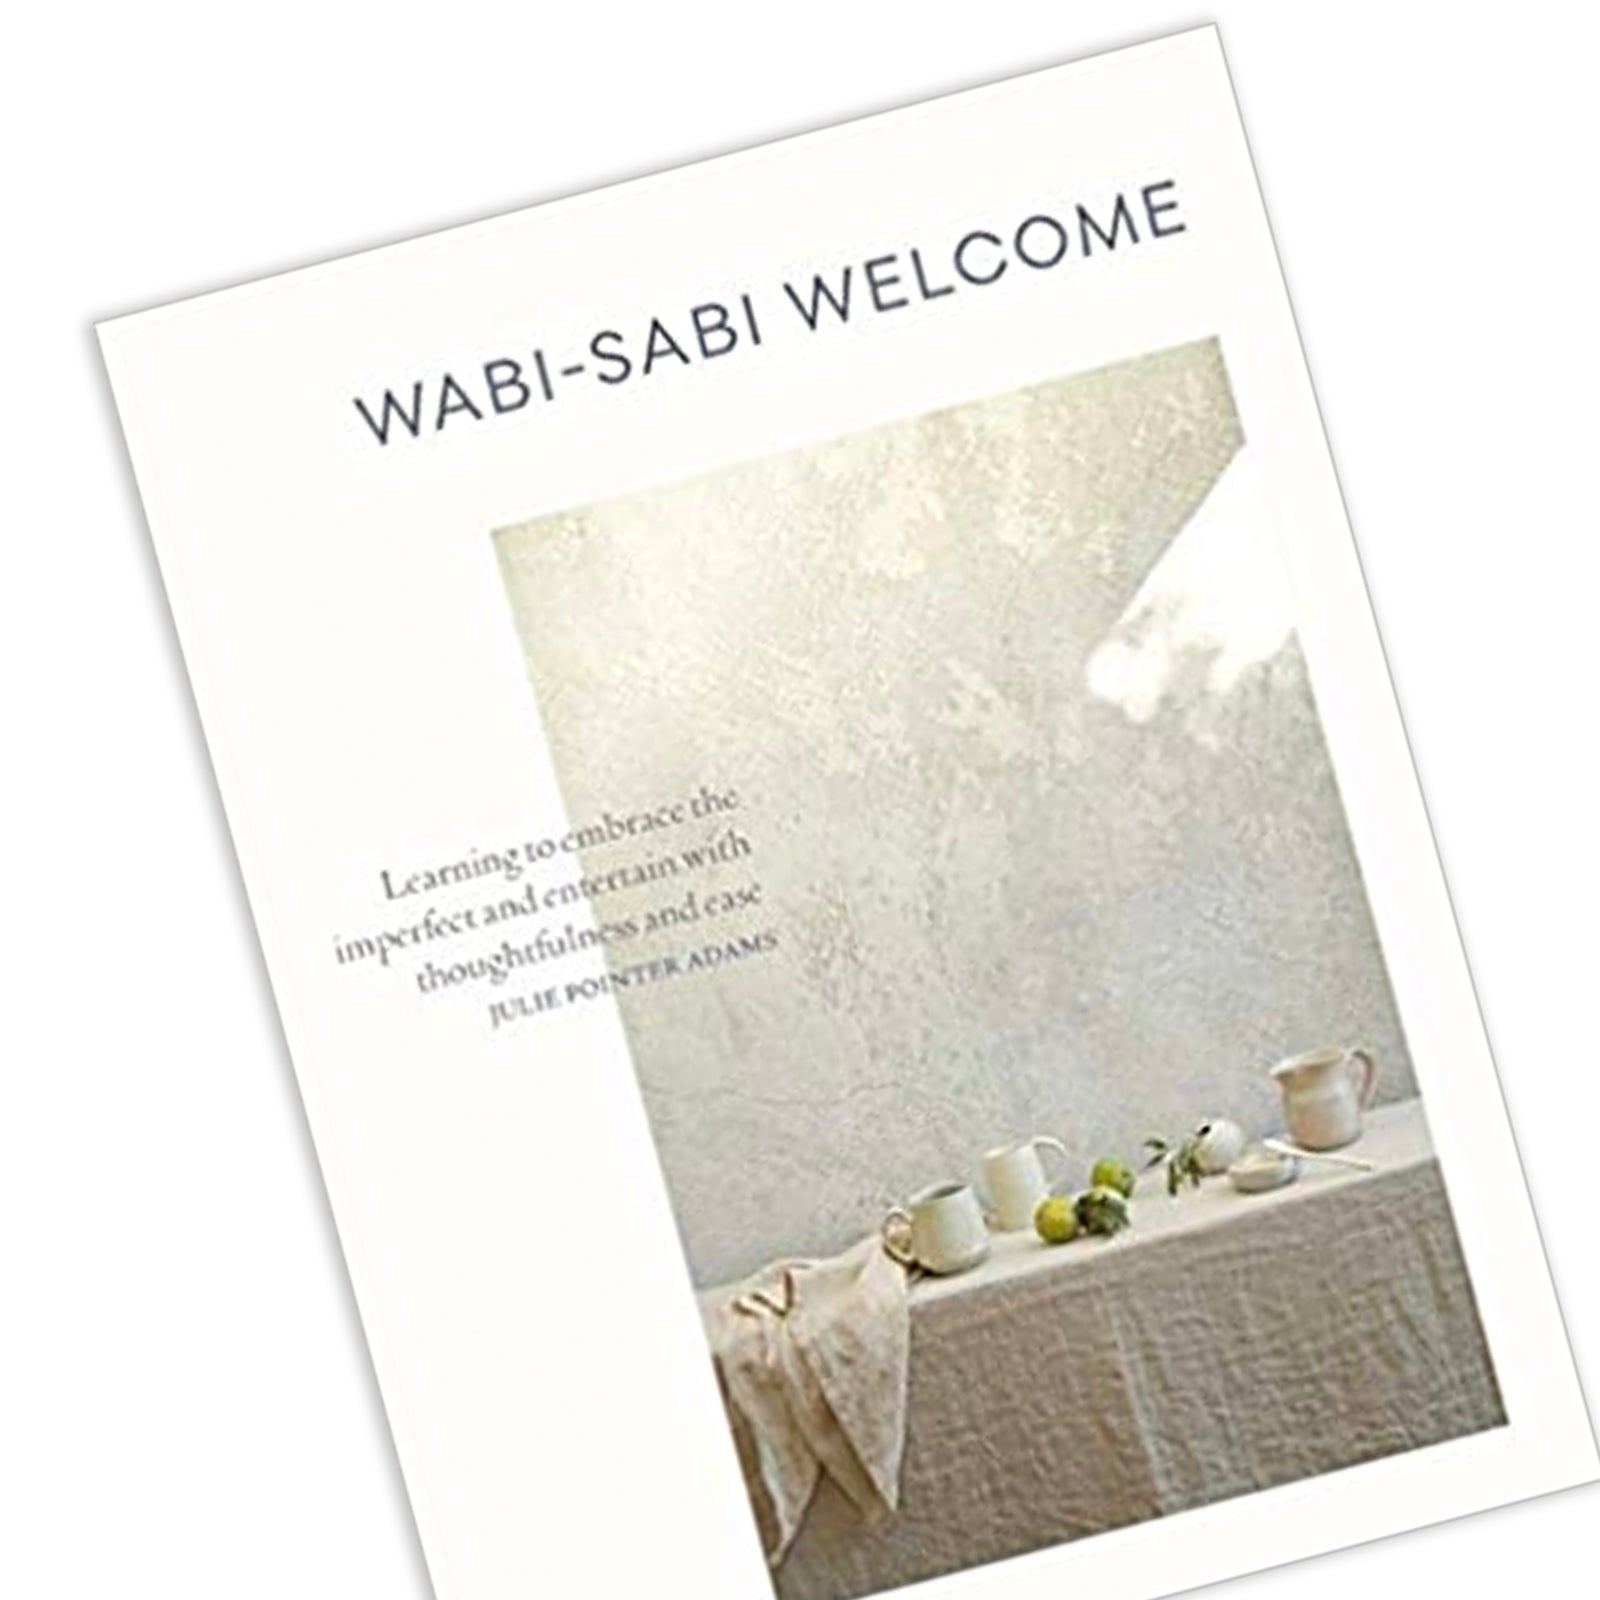 Wabi-Sabi Welcome - book